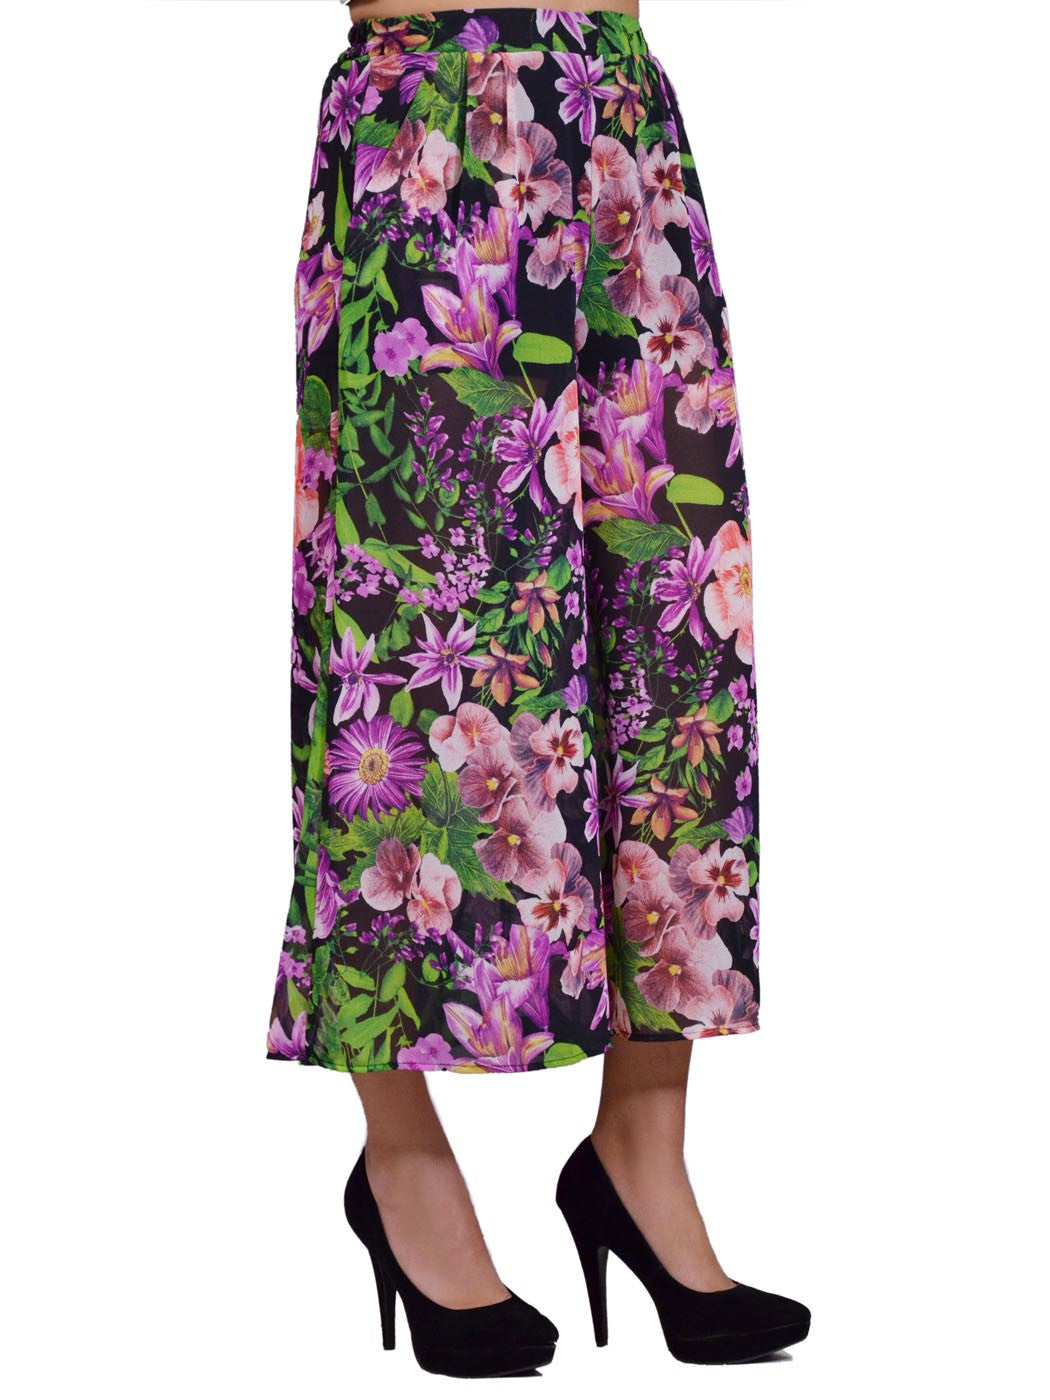 Lush Tropical Fun Floral Prints Culotte Knee Breeches Sheer Woven Pants